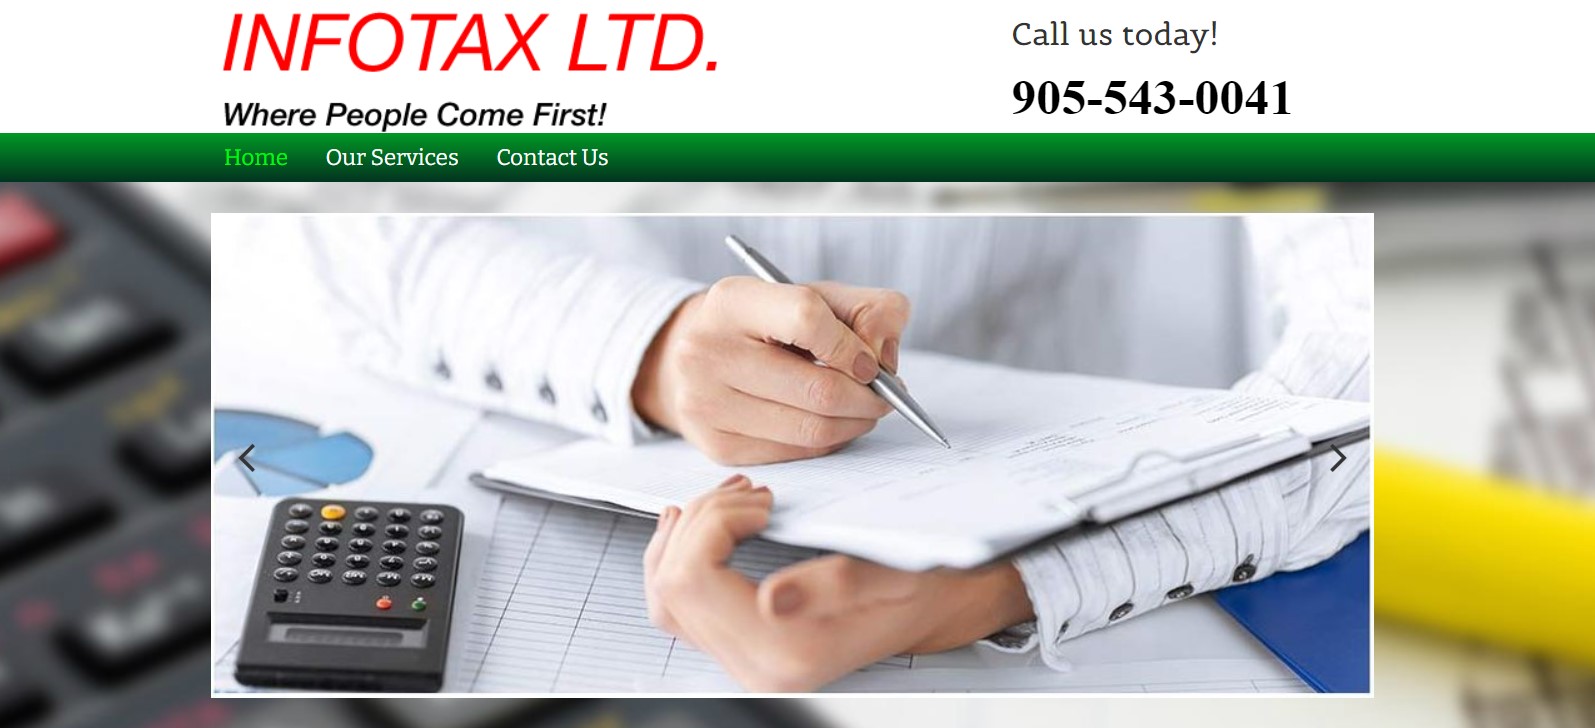 infotax tax service in hamilton